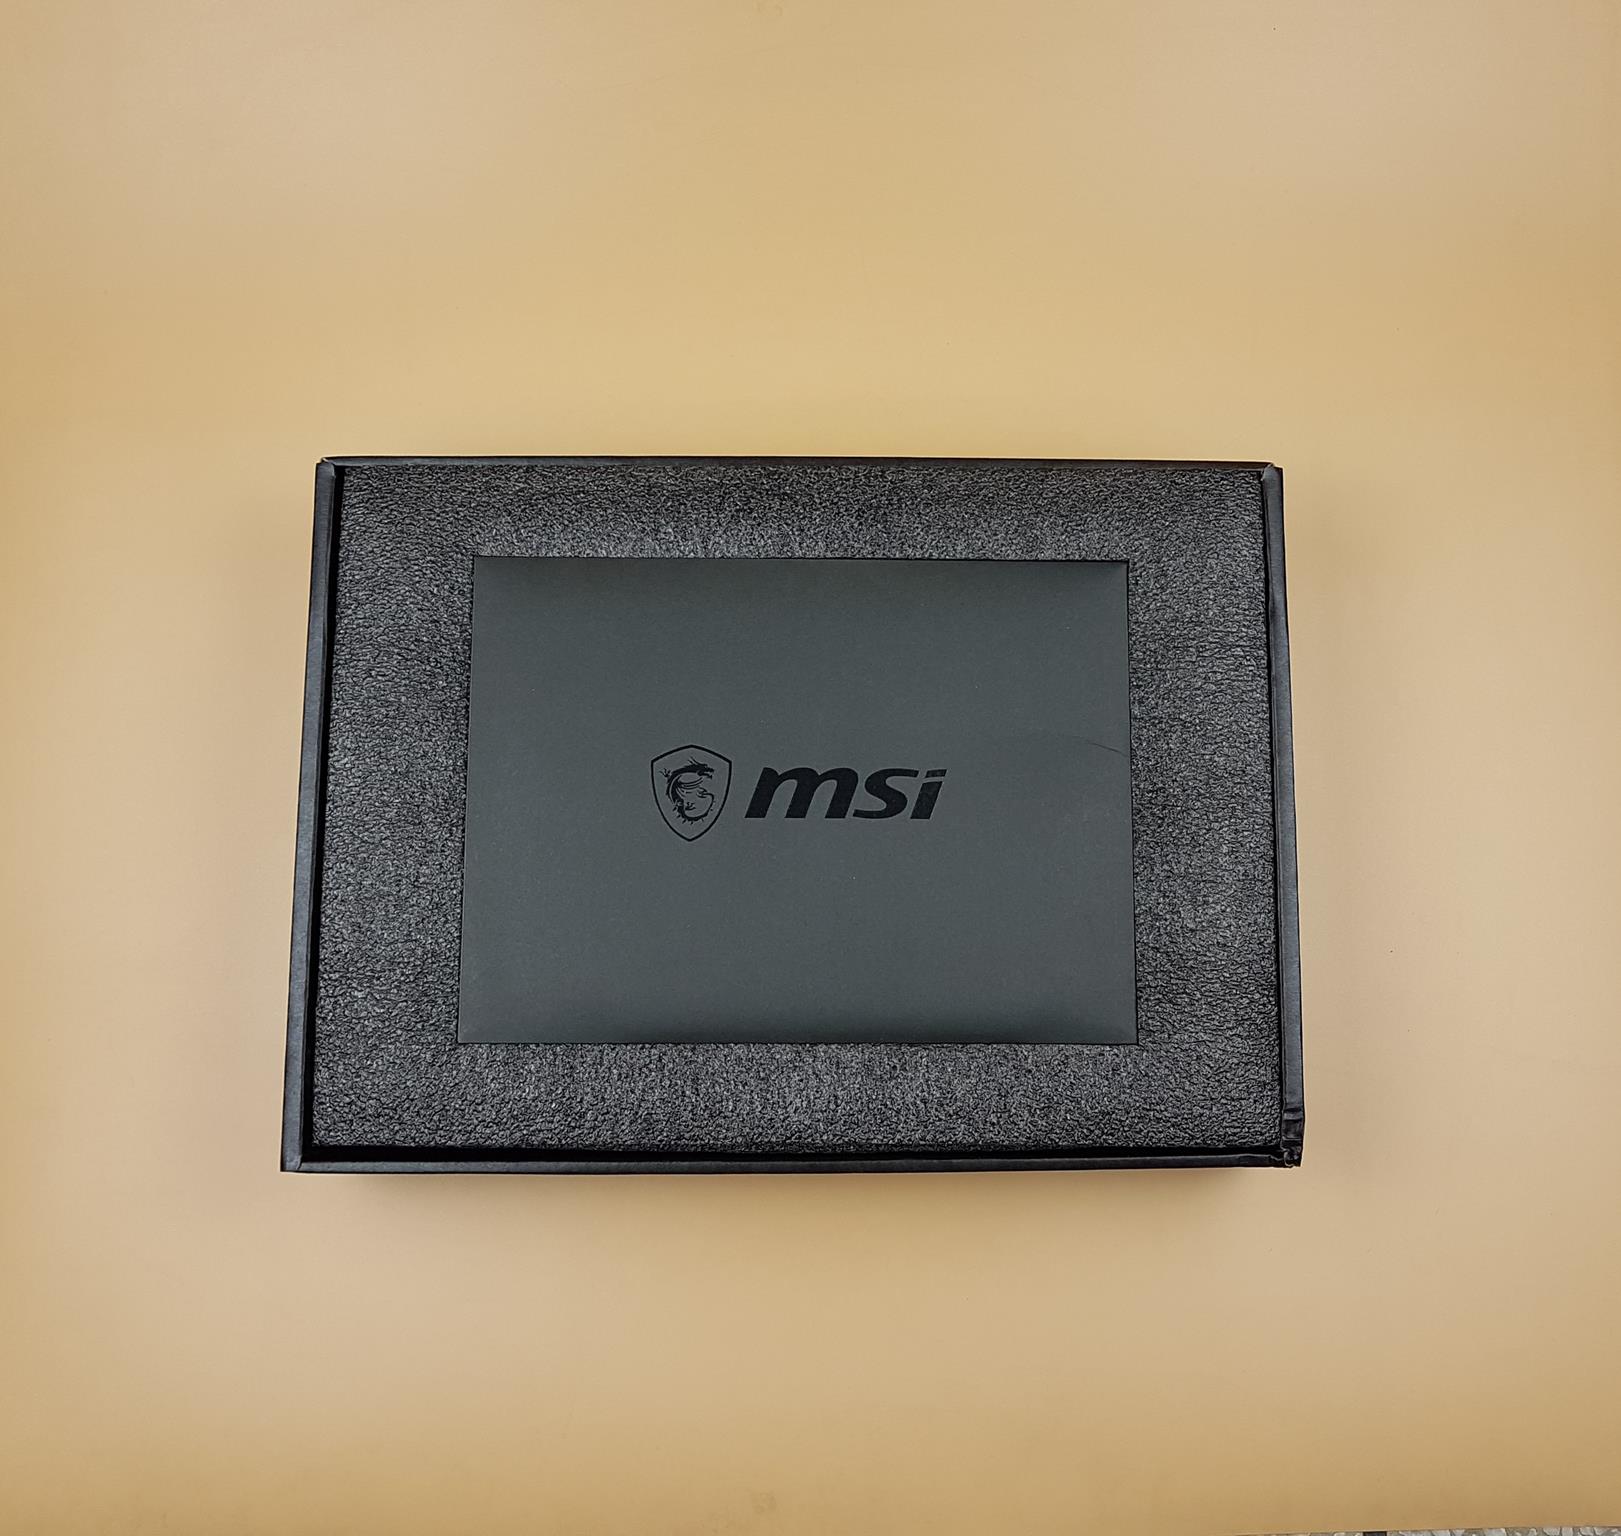 MSI RTX 3090 GDDR6X memory